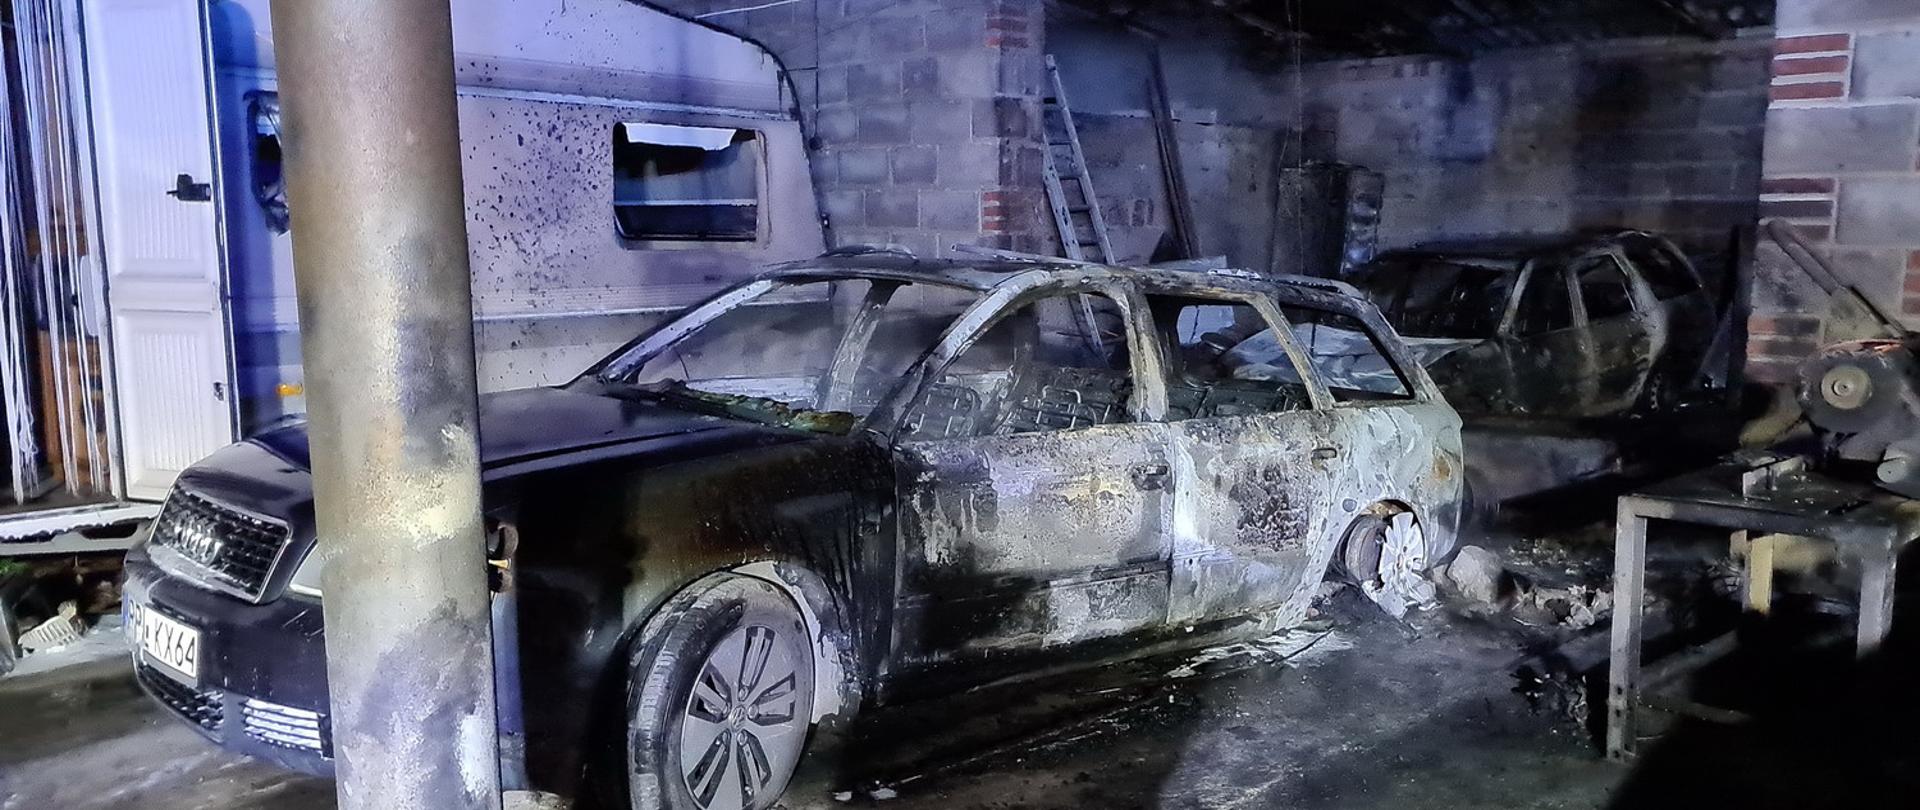 Dwa spalone auta osobowe w tle nadpalona przyczepa kempingowa